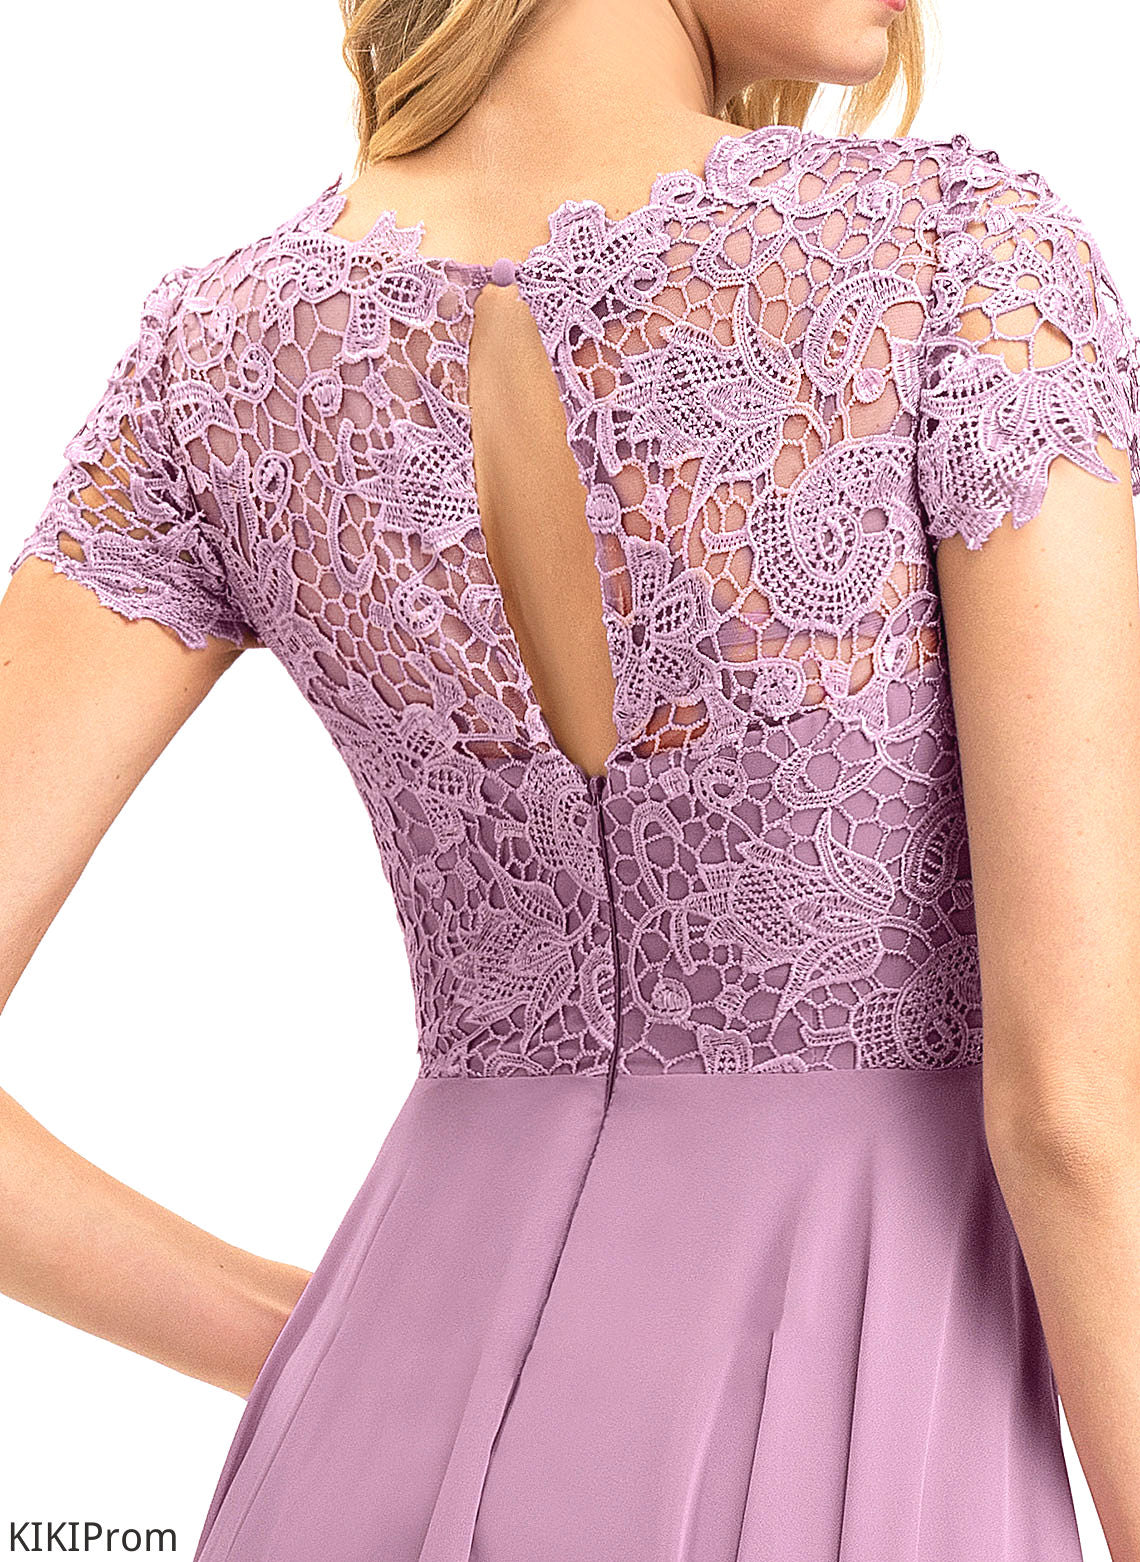 Fabric ScoopNeck Floor-Length Pockets A-Line Silhouette Neckline Length Embellishment Jillian Sleeveless Natural Waist Bridesmaid Dresses